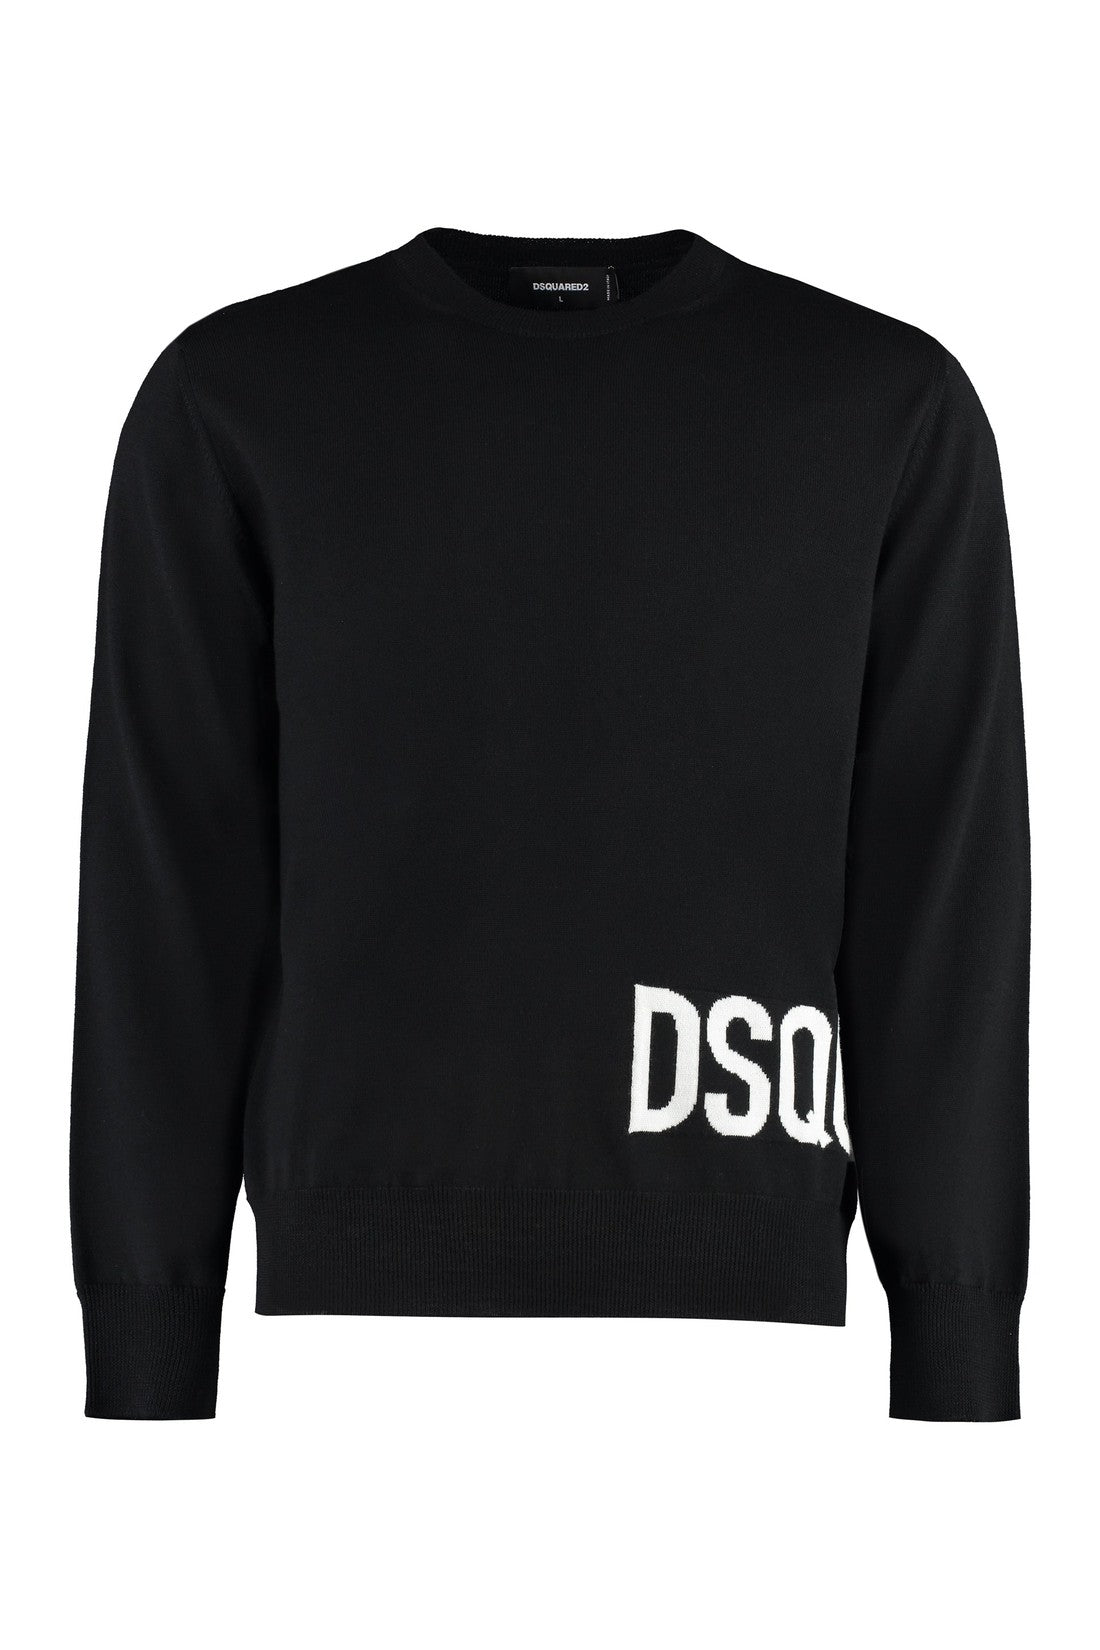 DSQ2 virgin wool crew-neck sweater